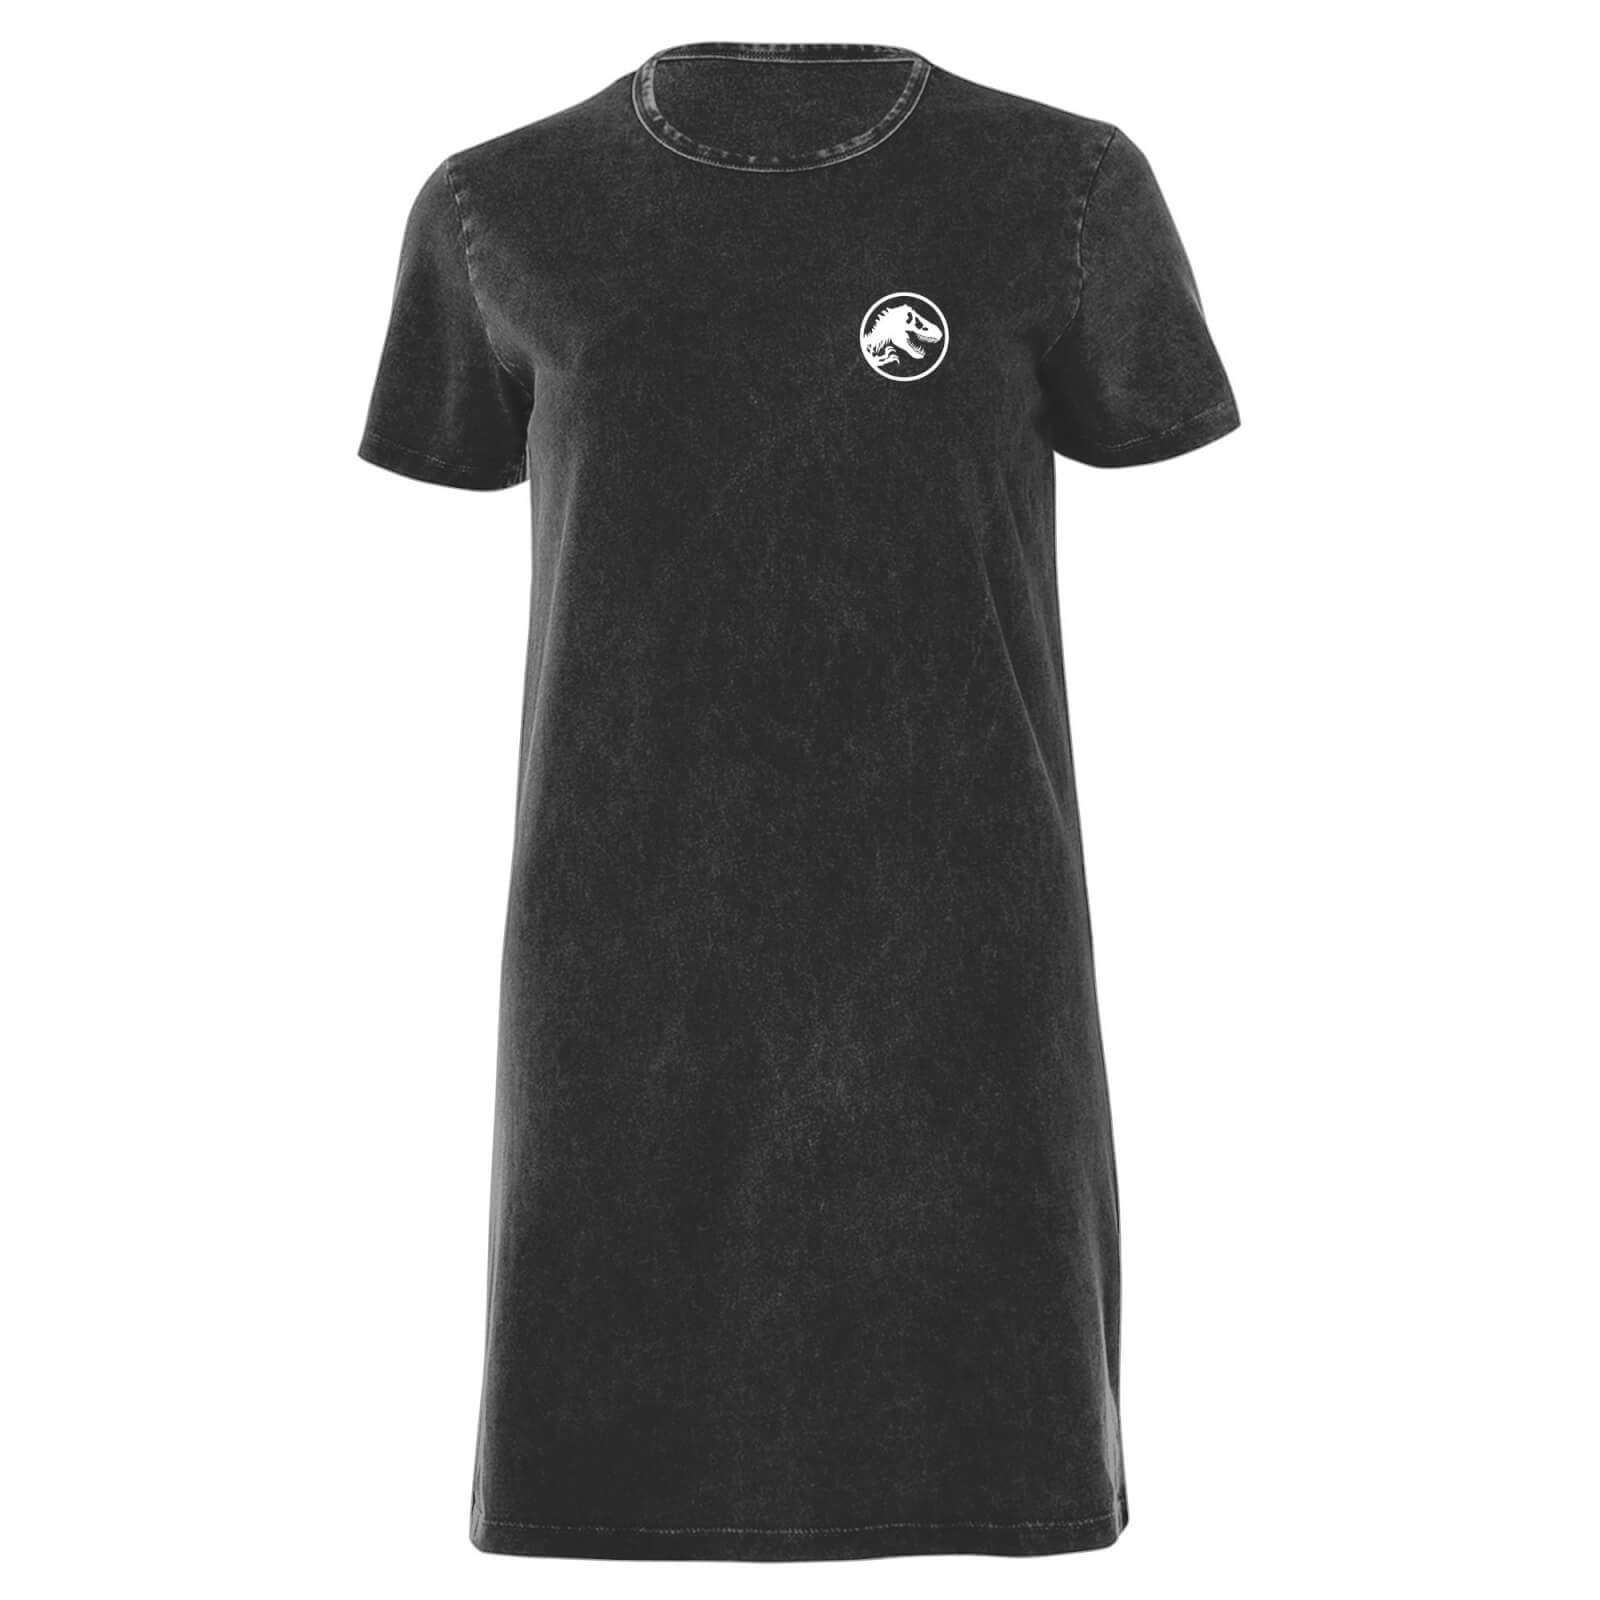 Jurassic Park White Women's T-Shirt Dress - Black Acid Wash - S - Black Acid Wash